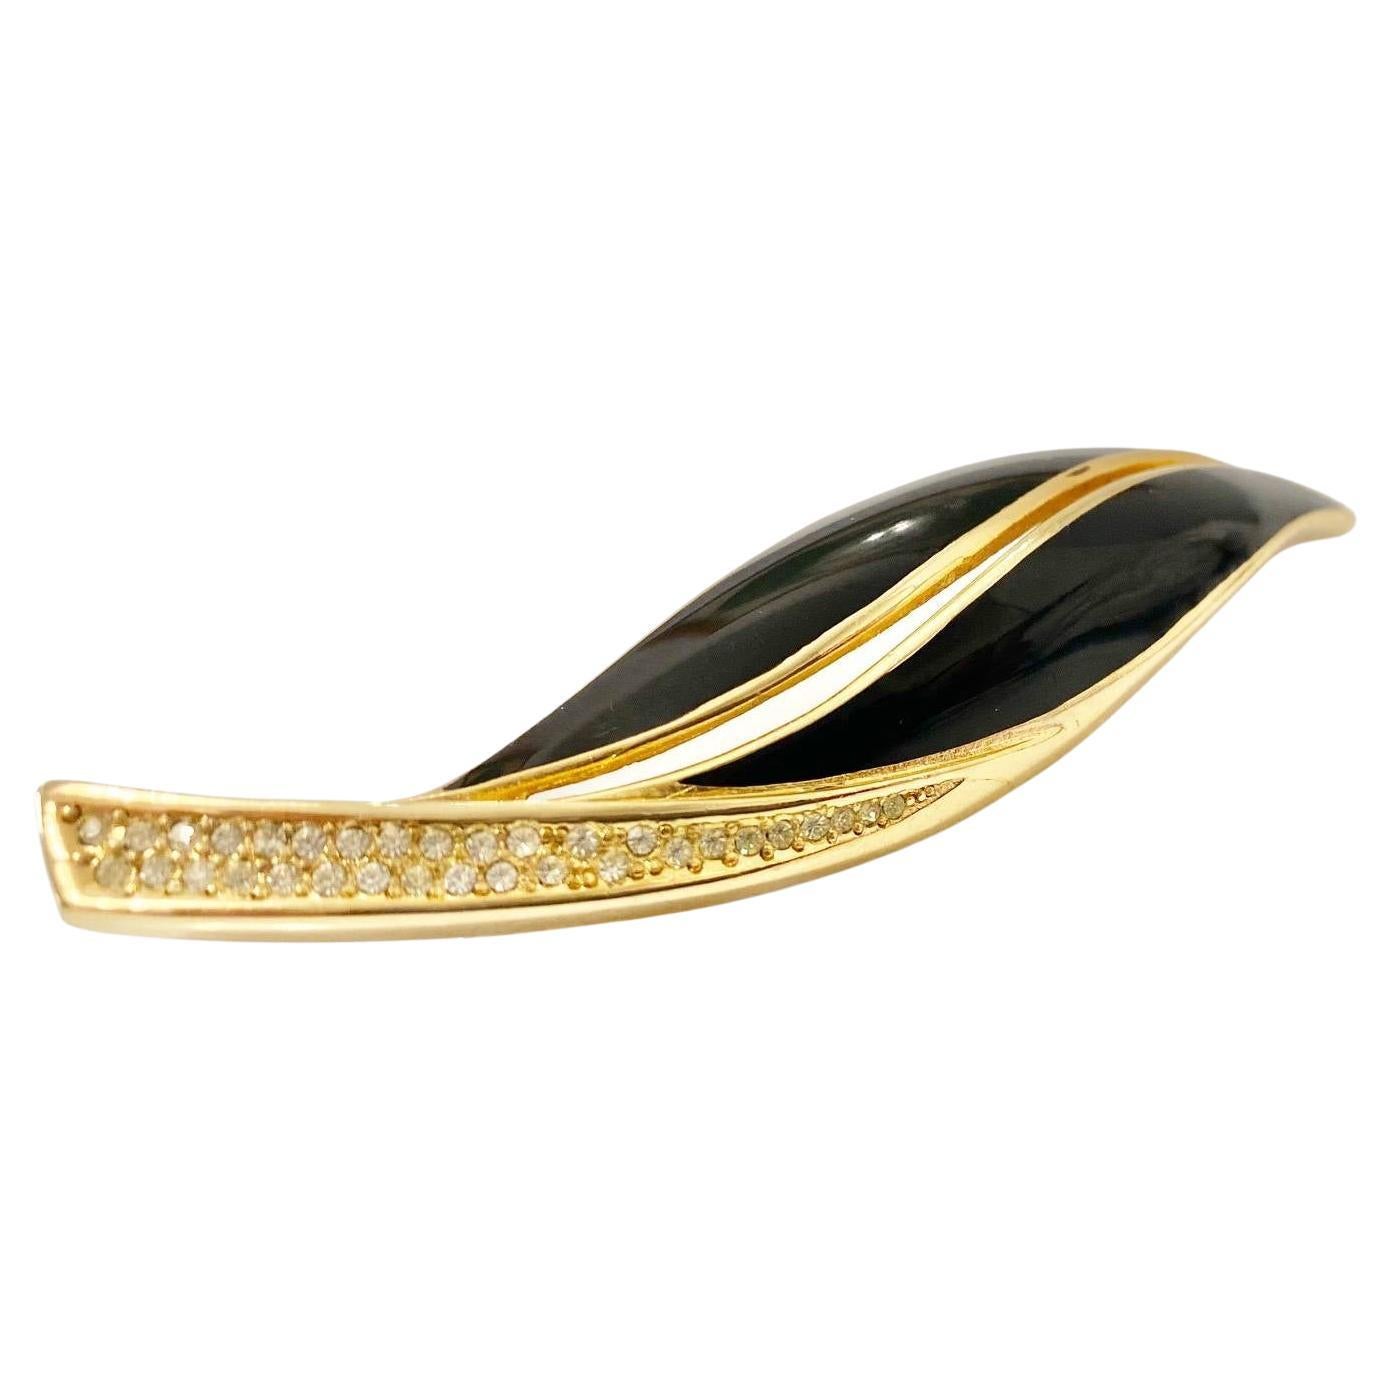  1980s Christian Dior Gold Plated Enamel Leaf Crystal Brooch For Sale